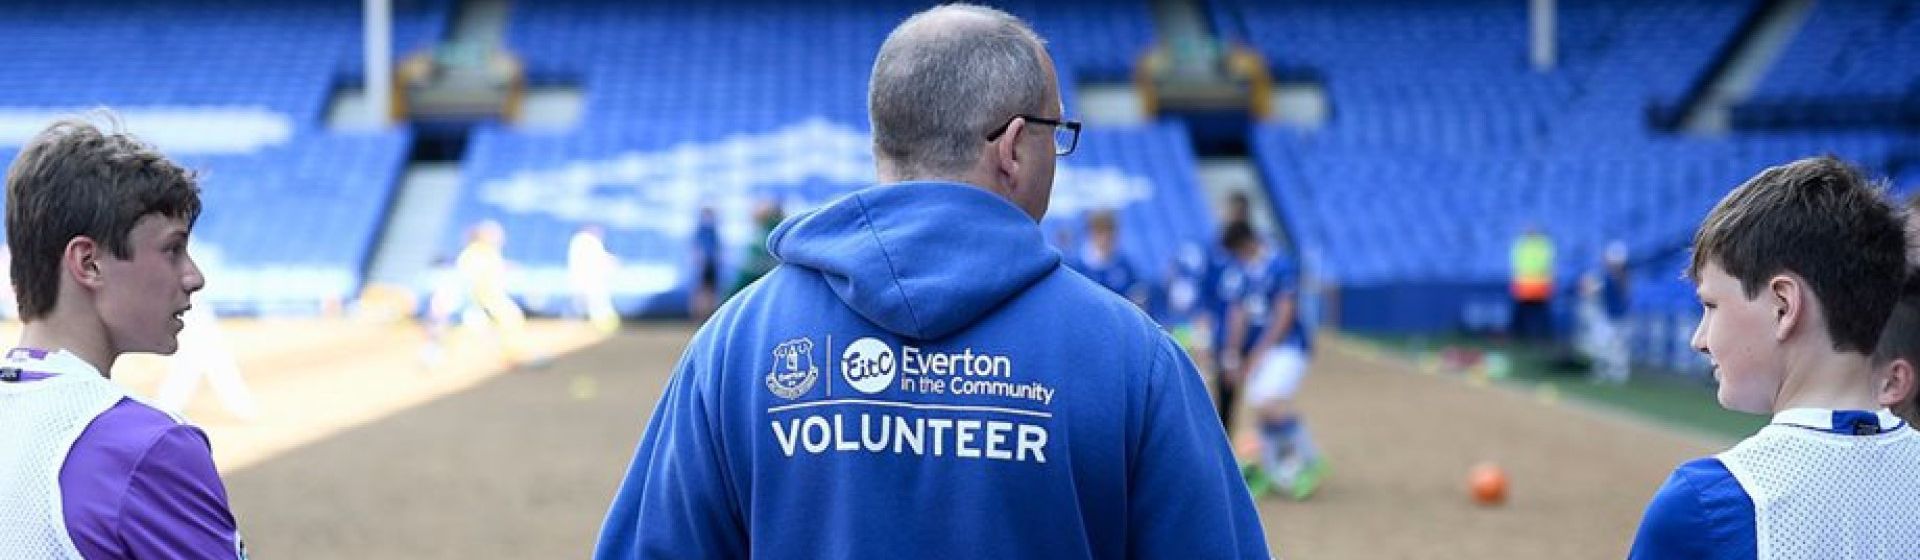 Everton volunteer recognition header